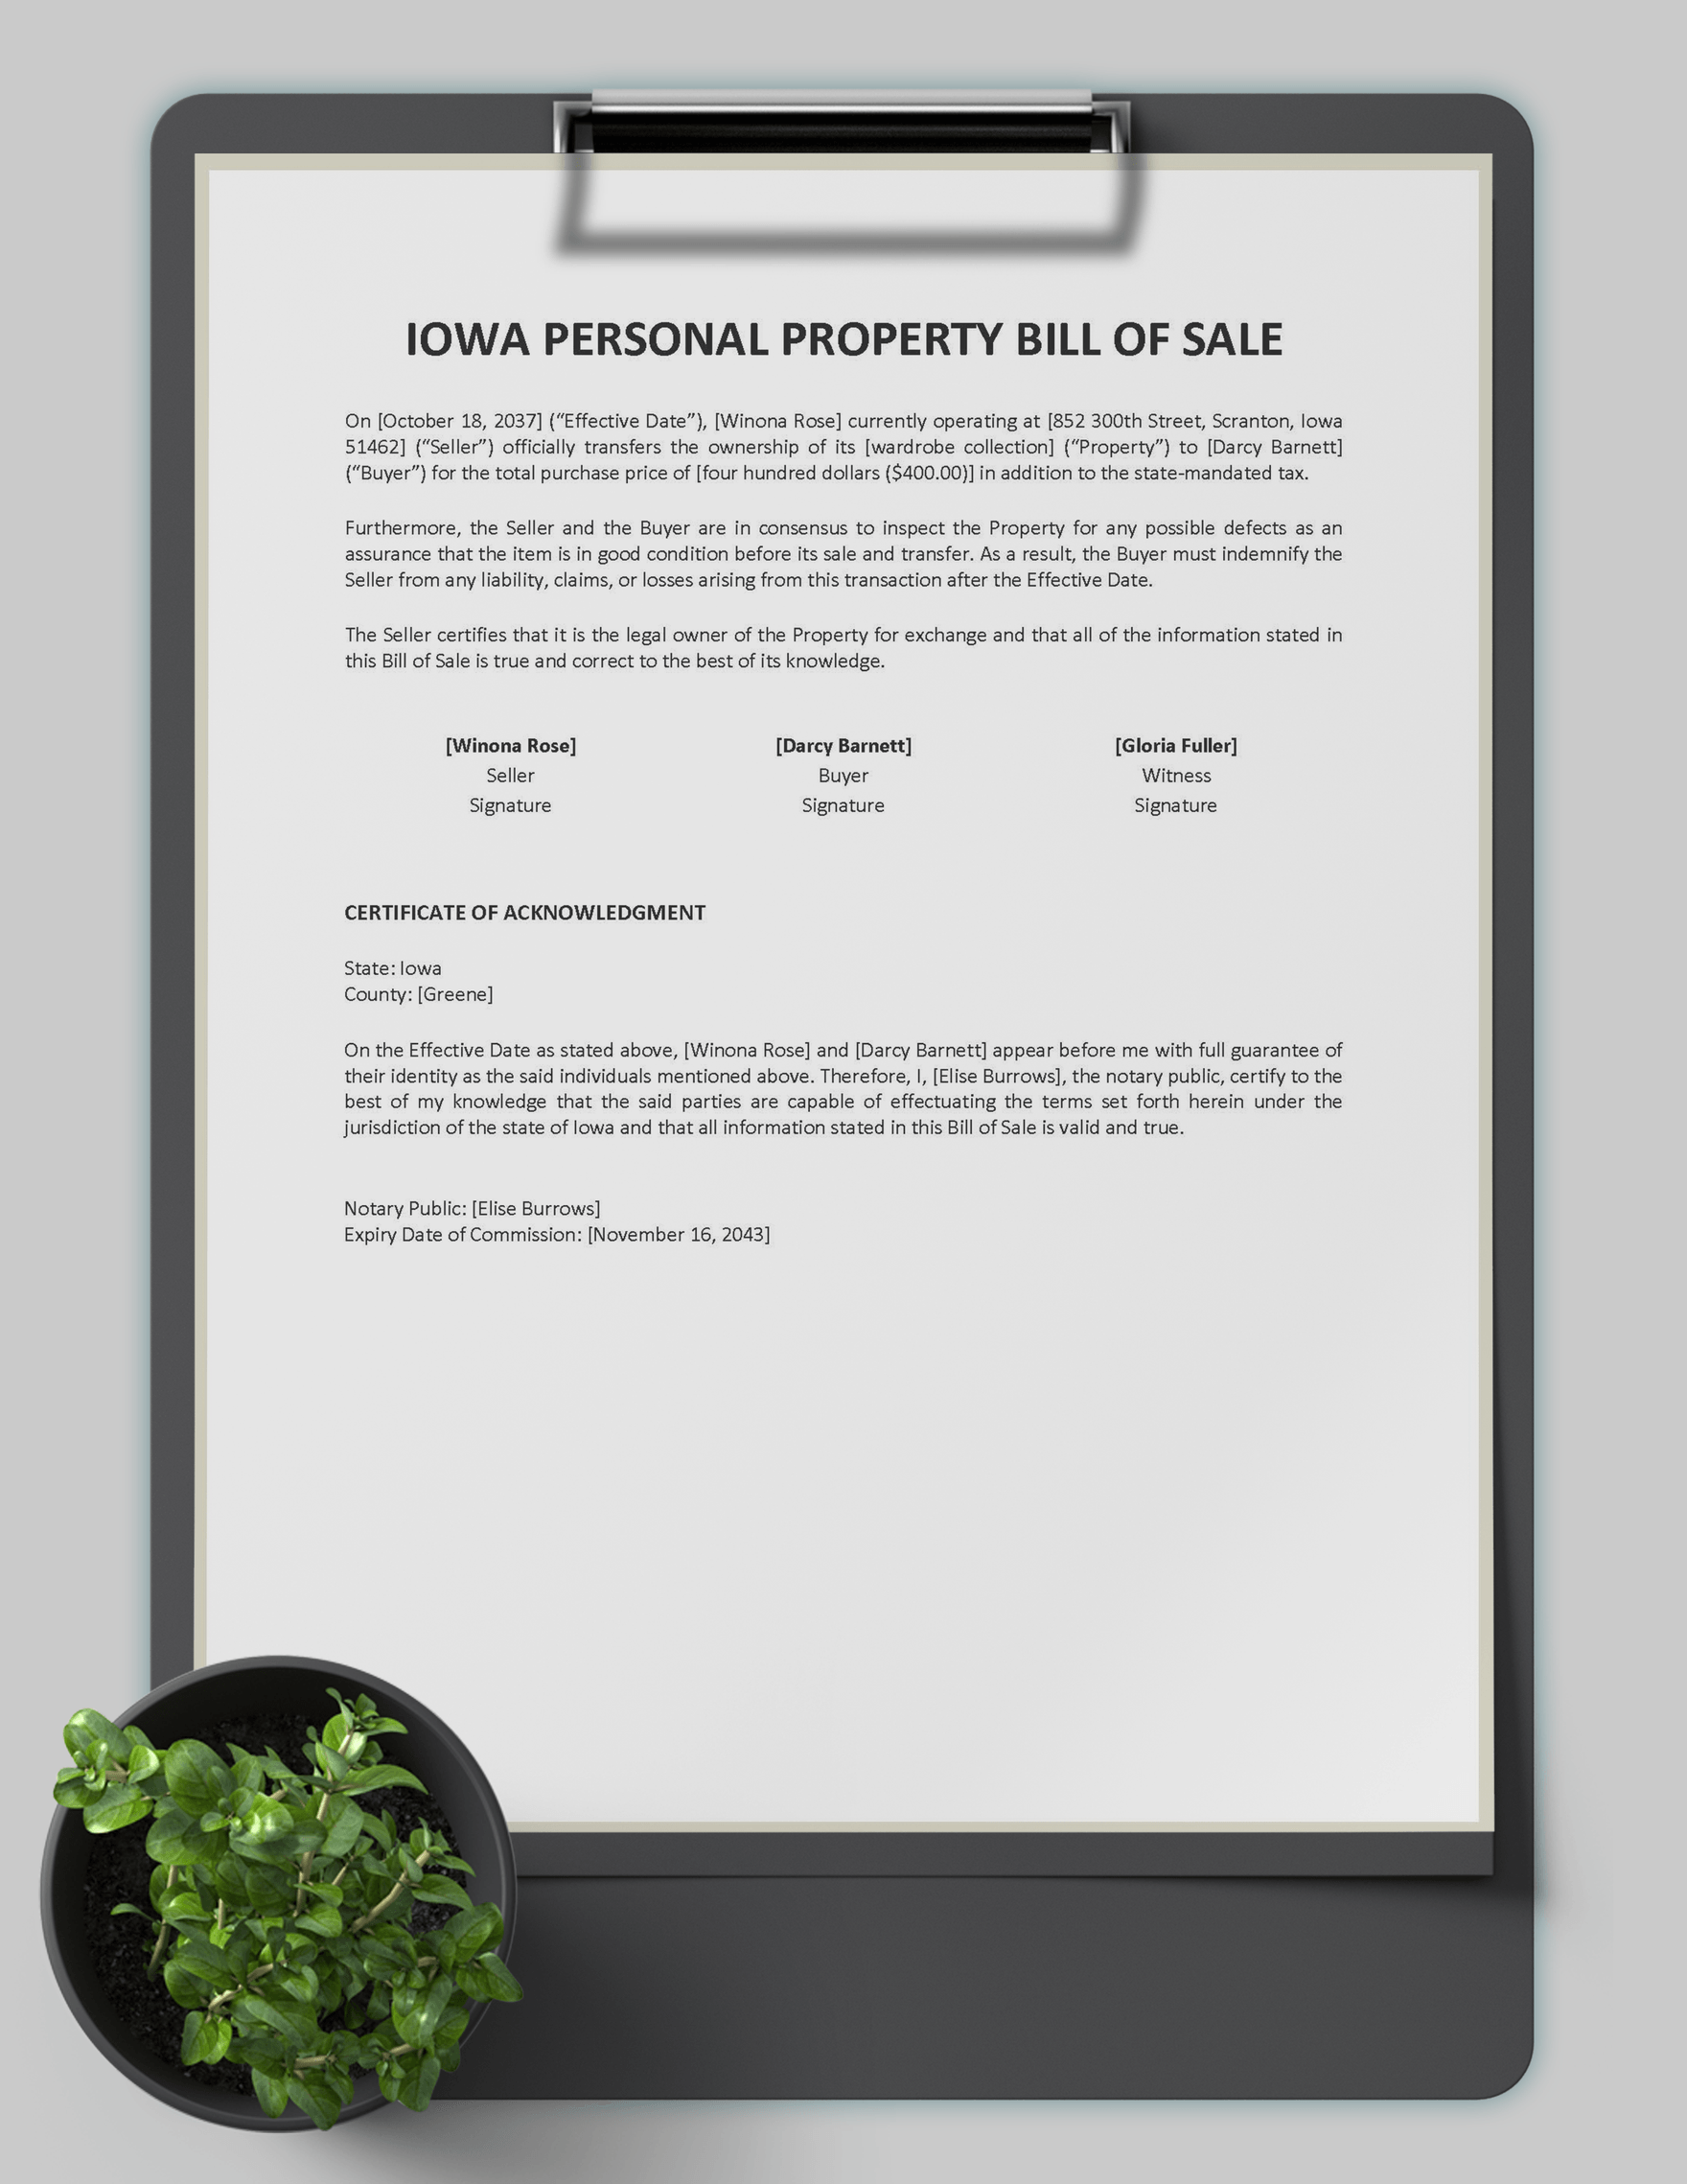 Iowa Personal Property Bill of Sale Template